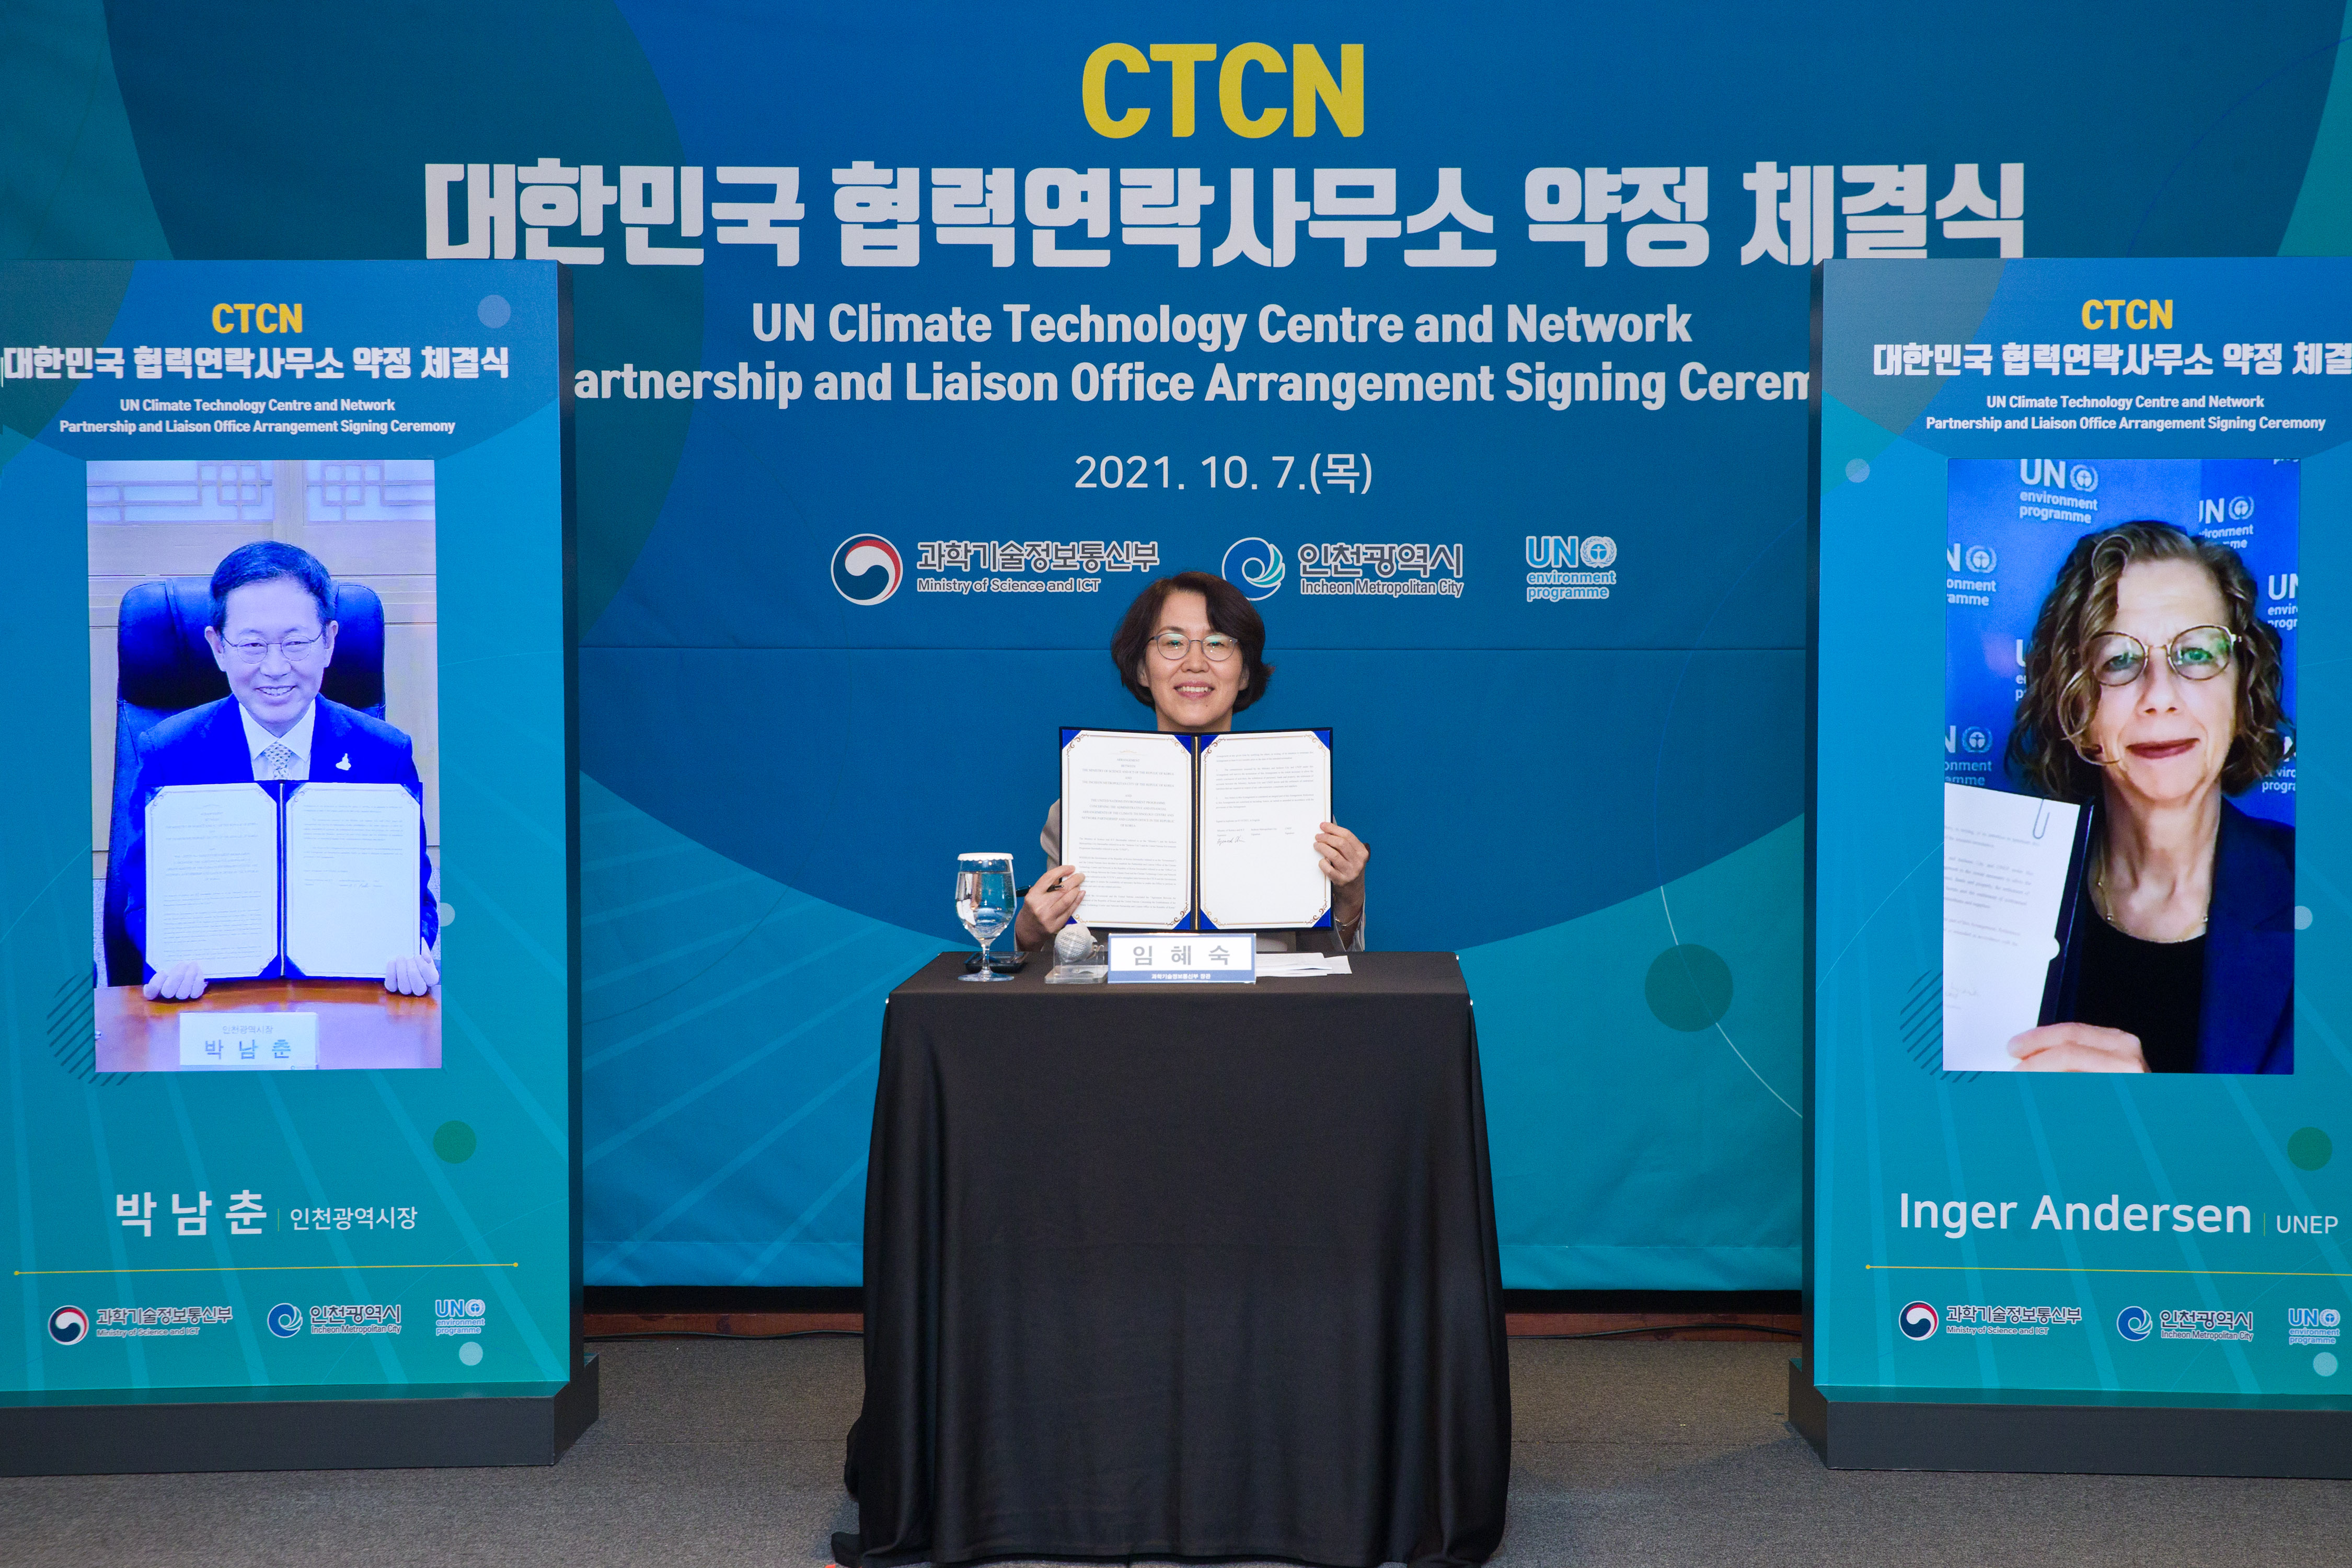 CTCN 대한민국 협력연락사무소 인천 송도에 설립 관련 이미지